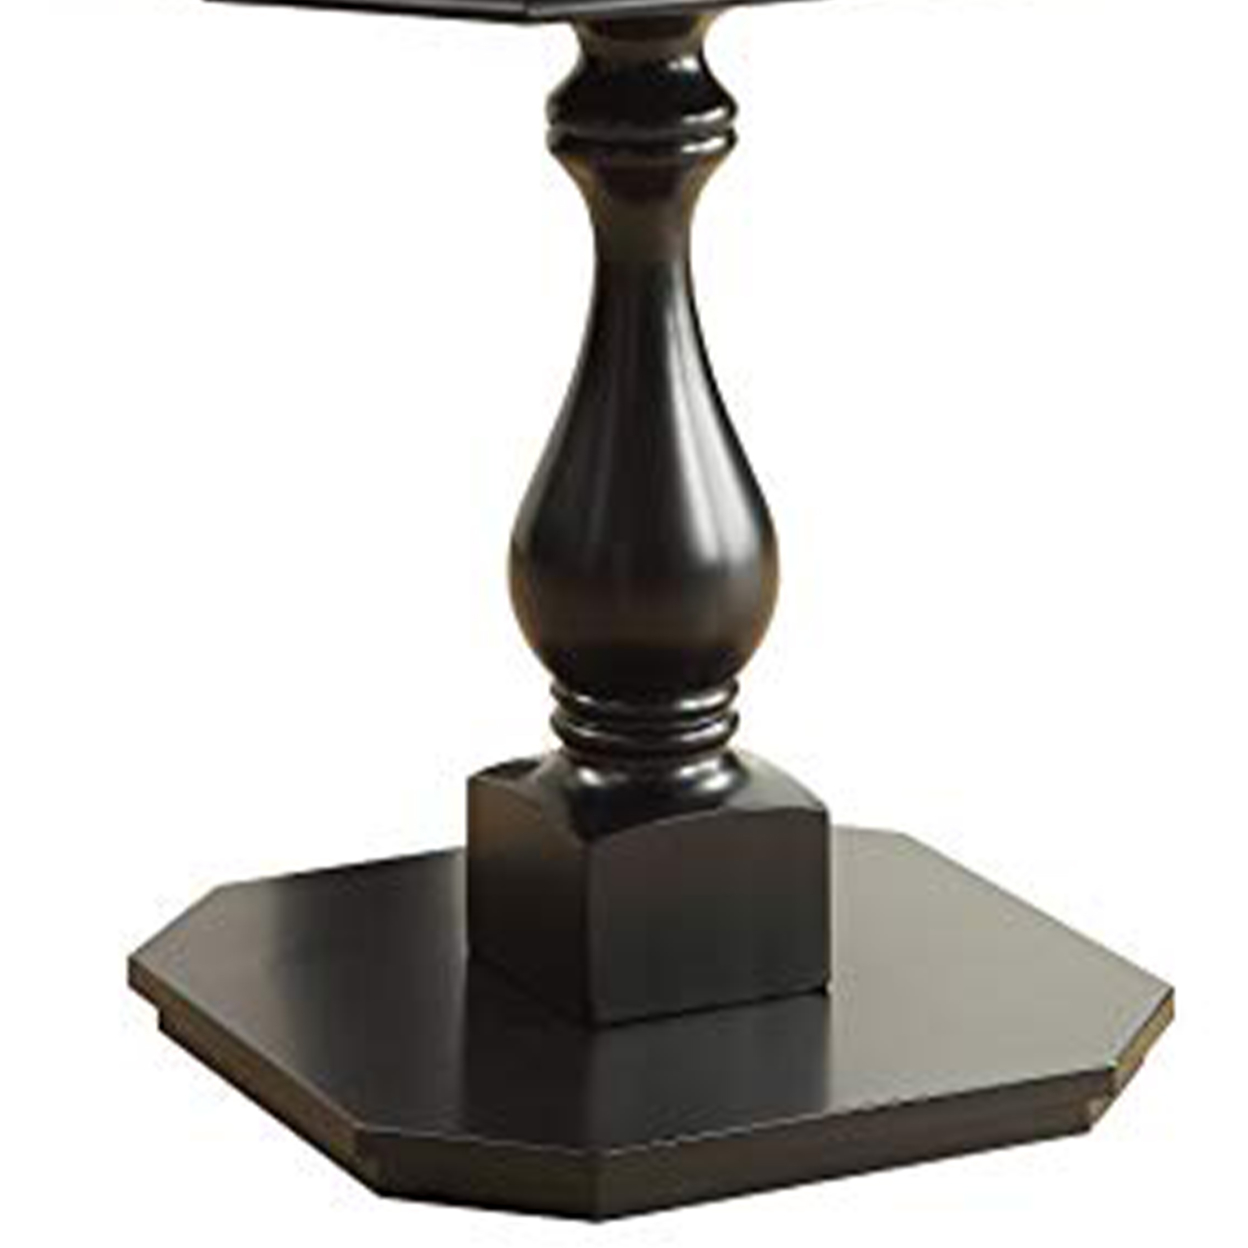 Wooden Chess Game TableWith One Drawer, Black- Saltoro Sherpi